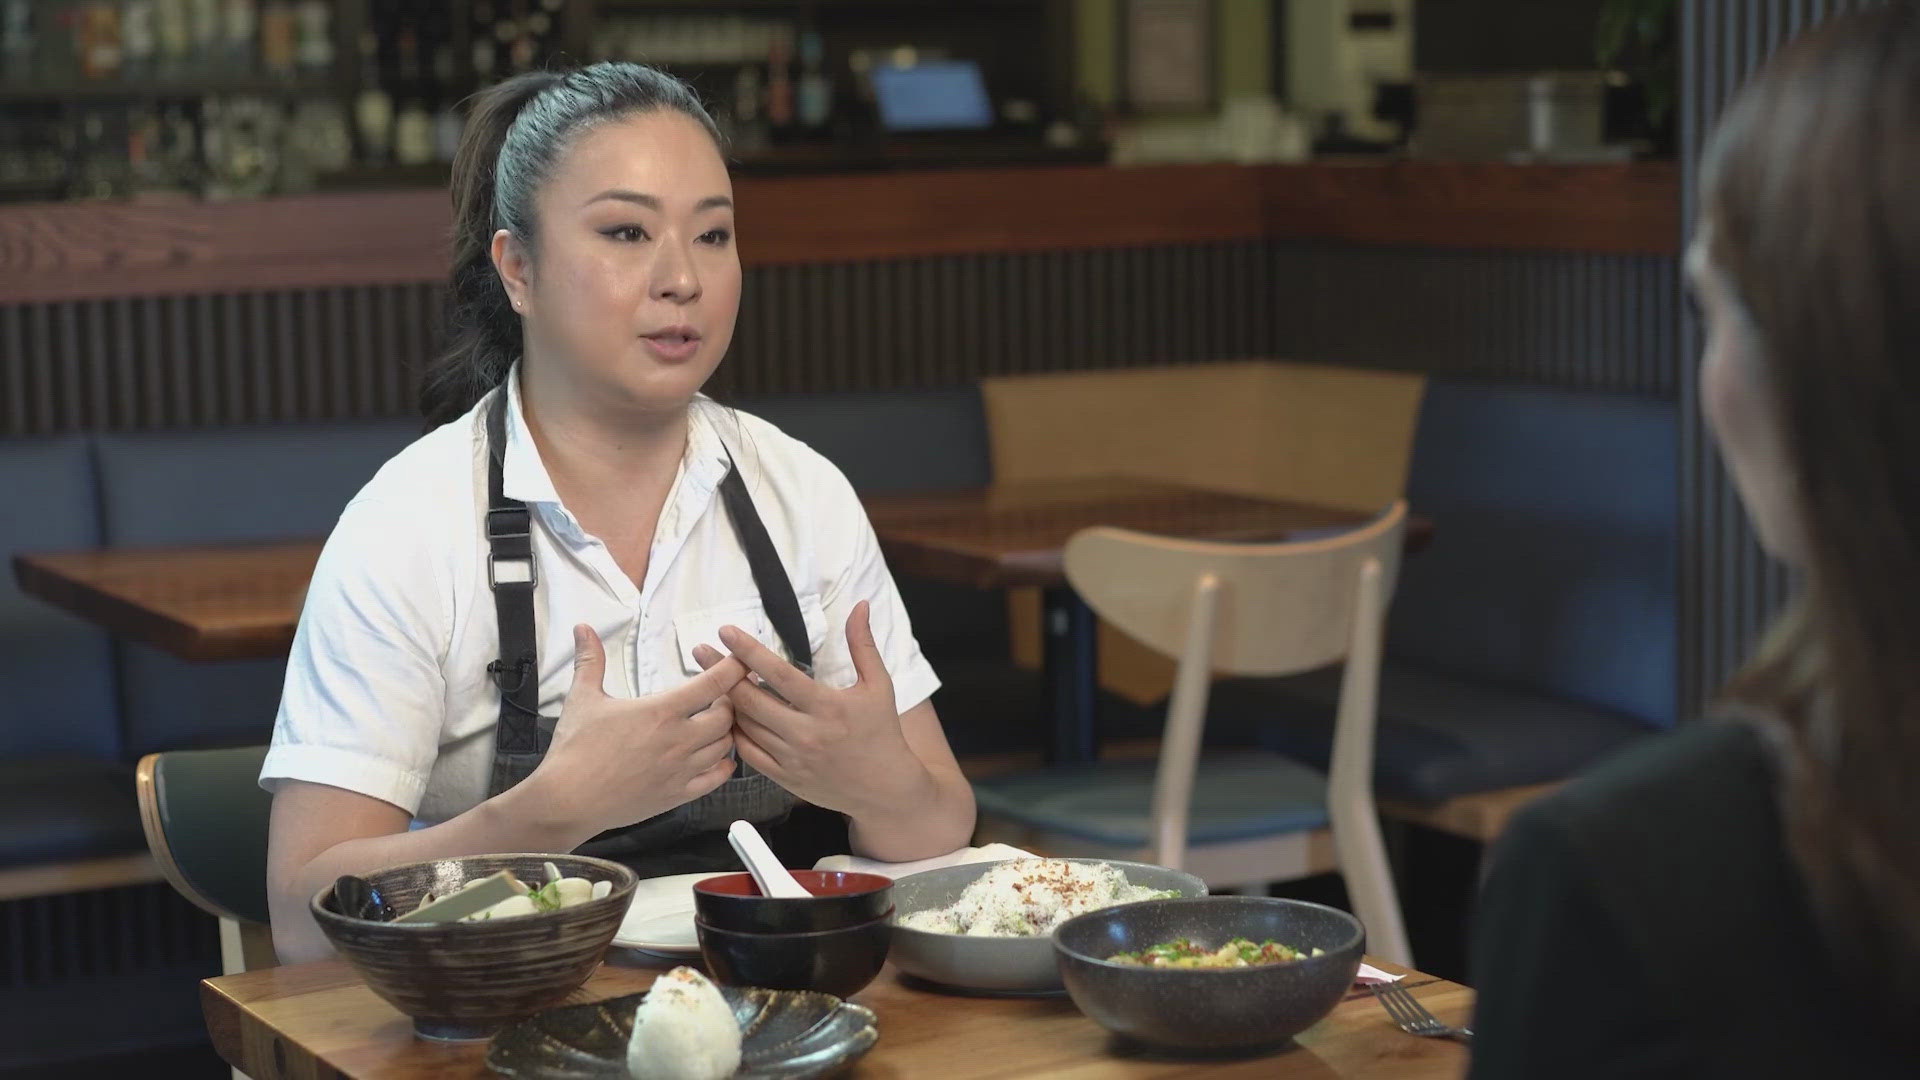 We wanted to introduce you to Masako Morishita - leaving her mark on Washington D.C.’s iconic culinary scene.